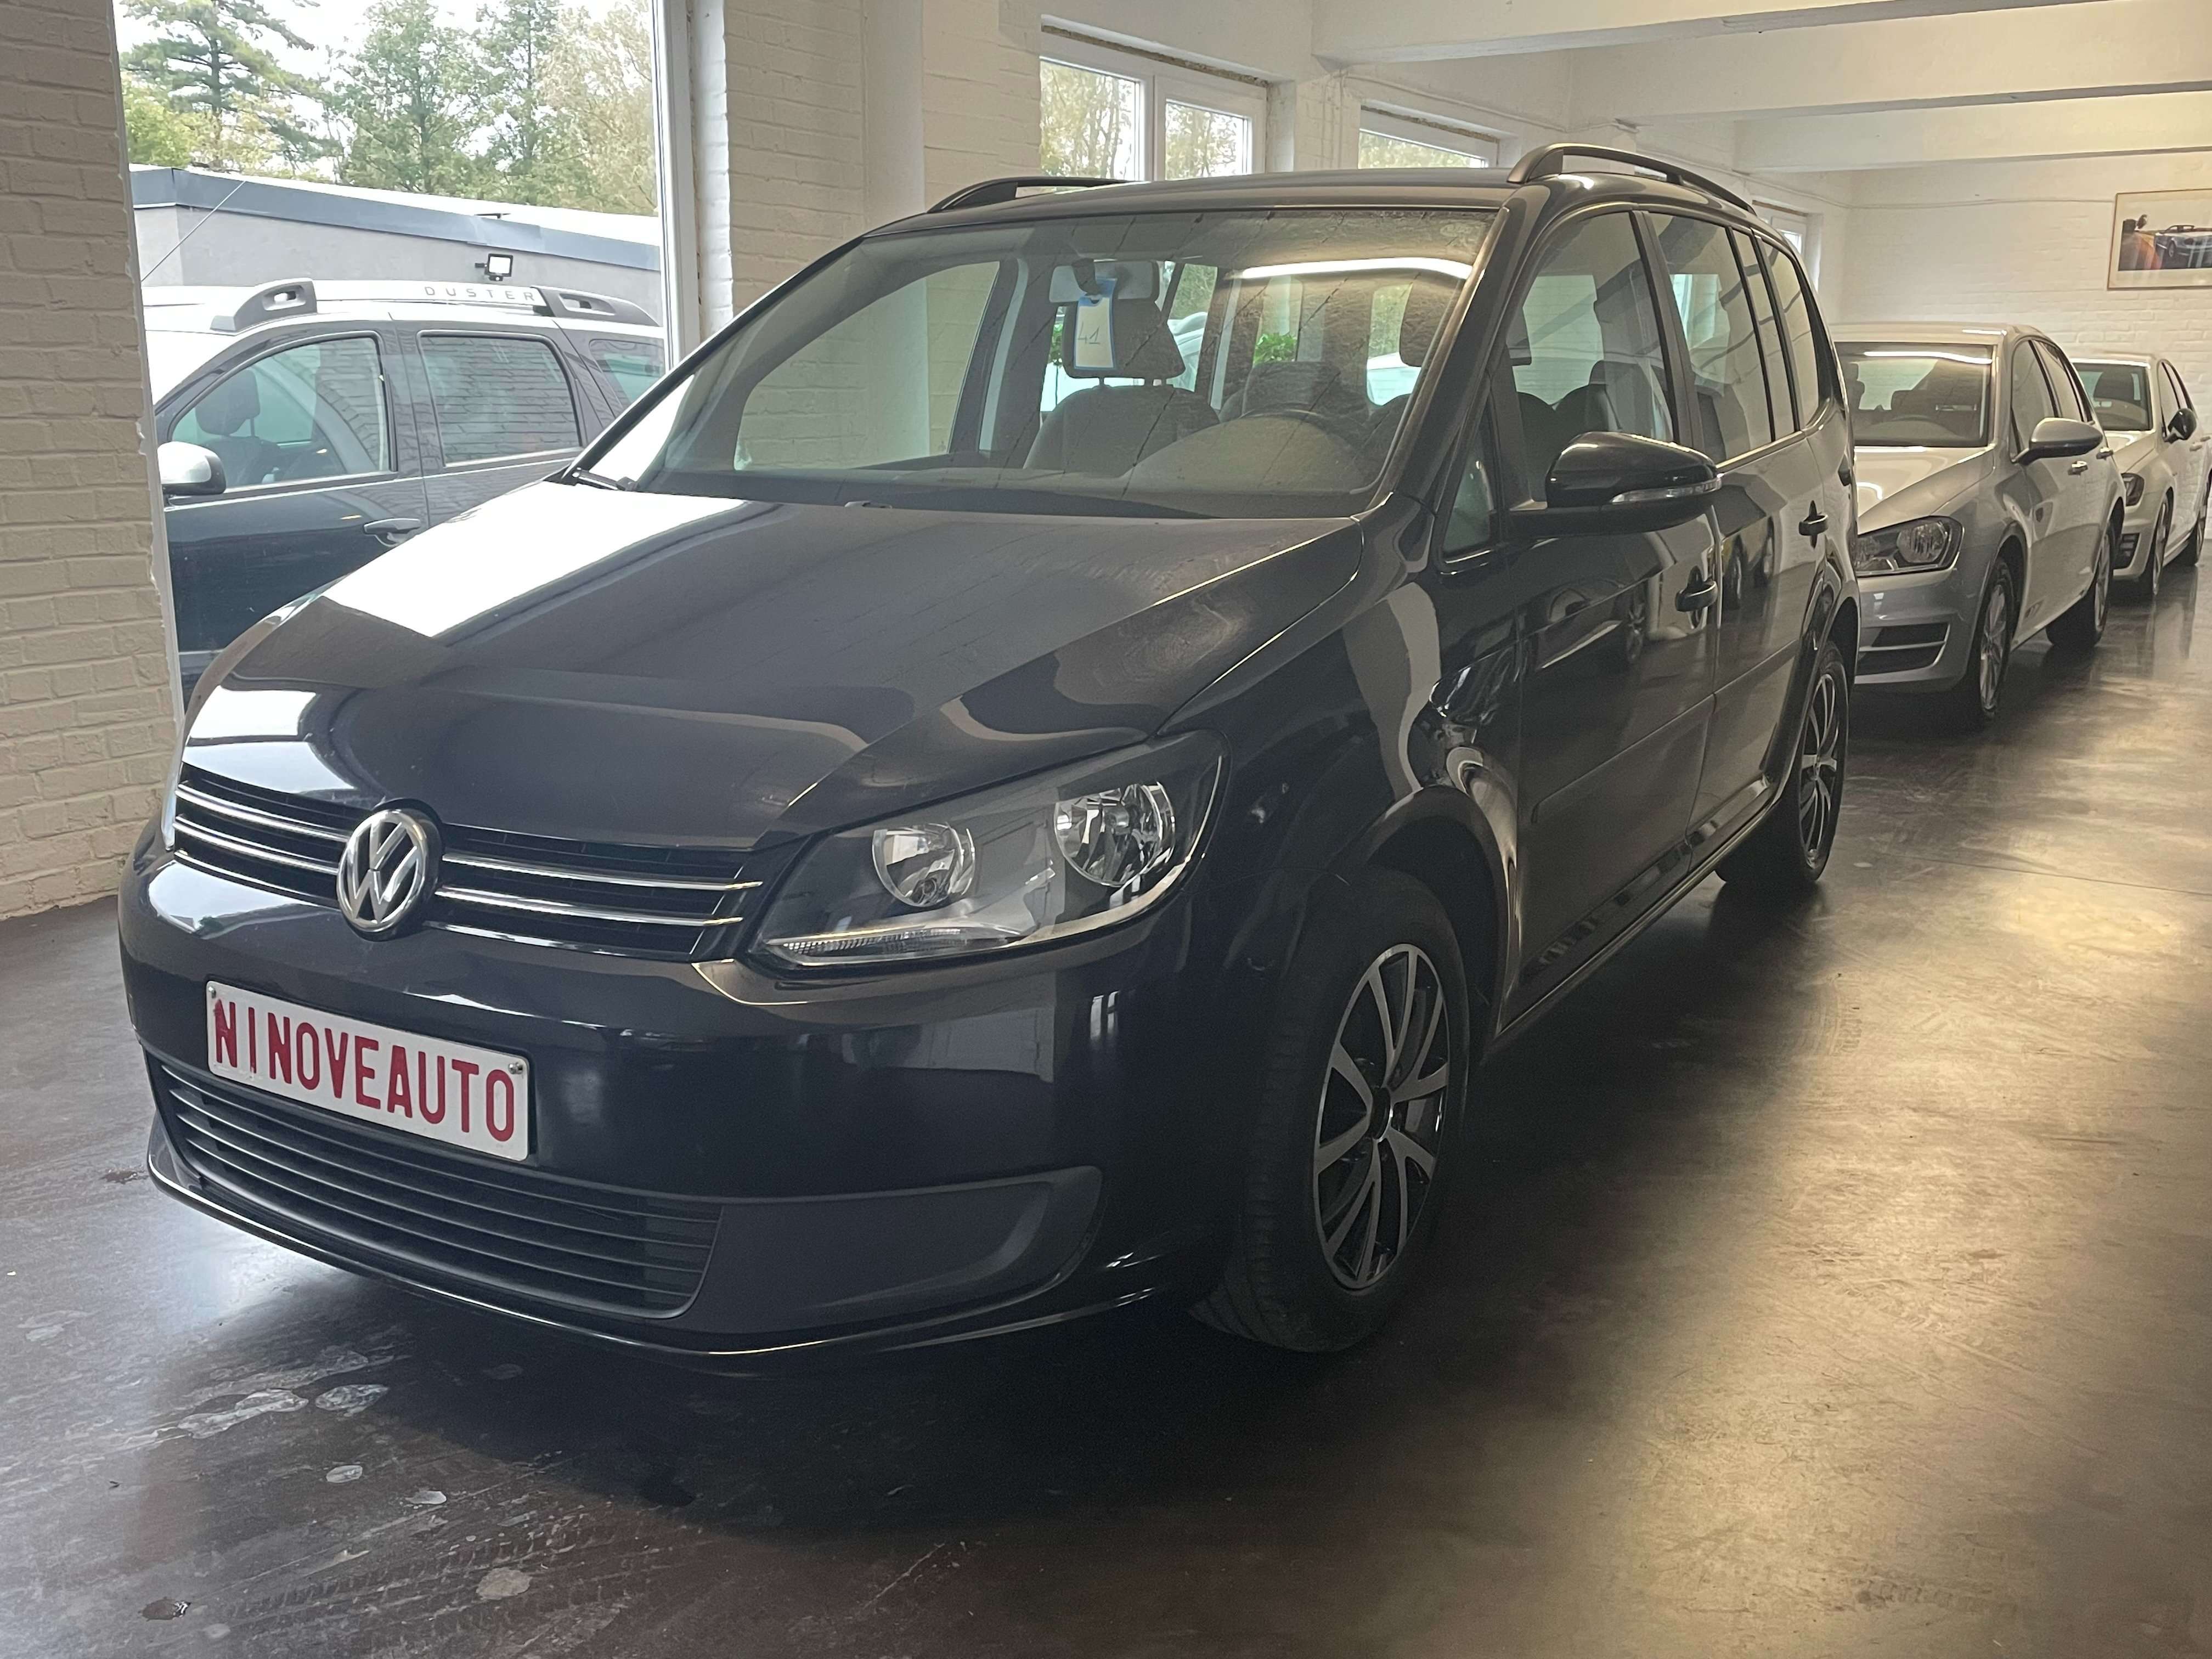 Ninove auto - Volkswagen Touran